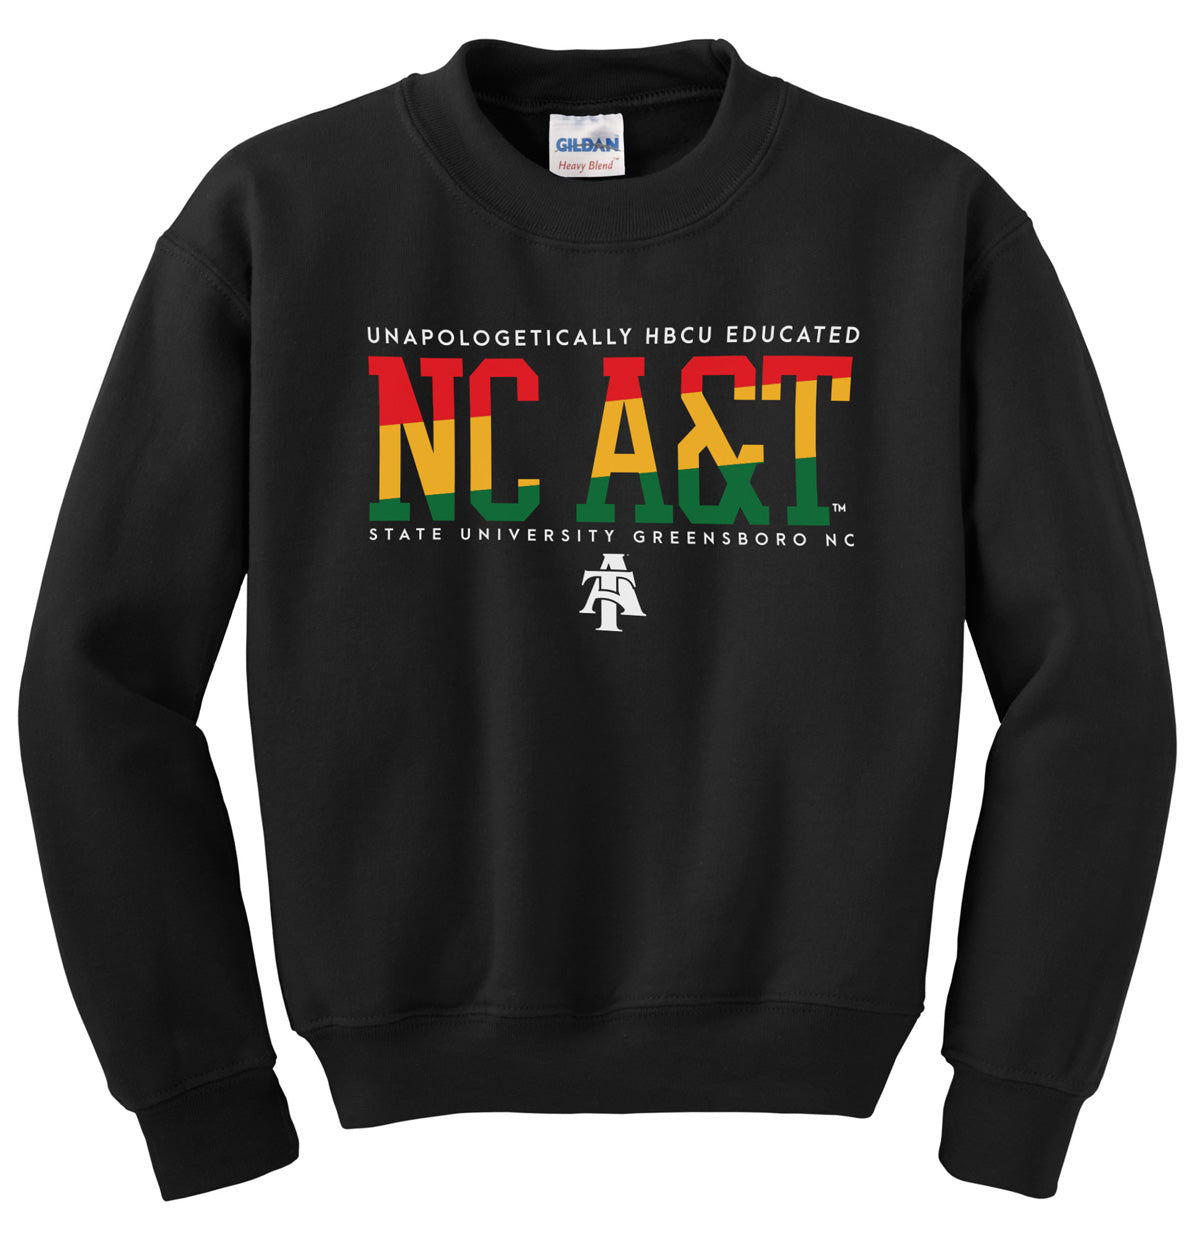 NC A&T AGGIE | 1892 Haile Selassie RASTA COLORS Black unisex Sweatshirt (z)